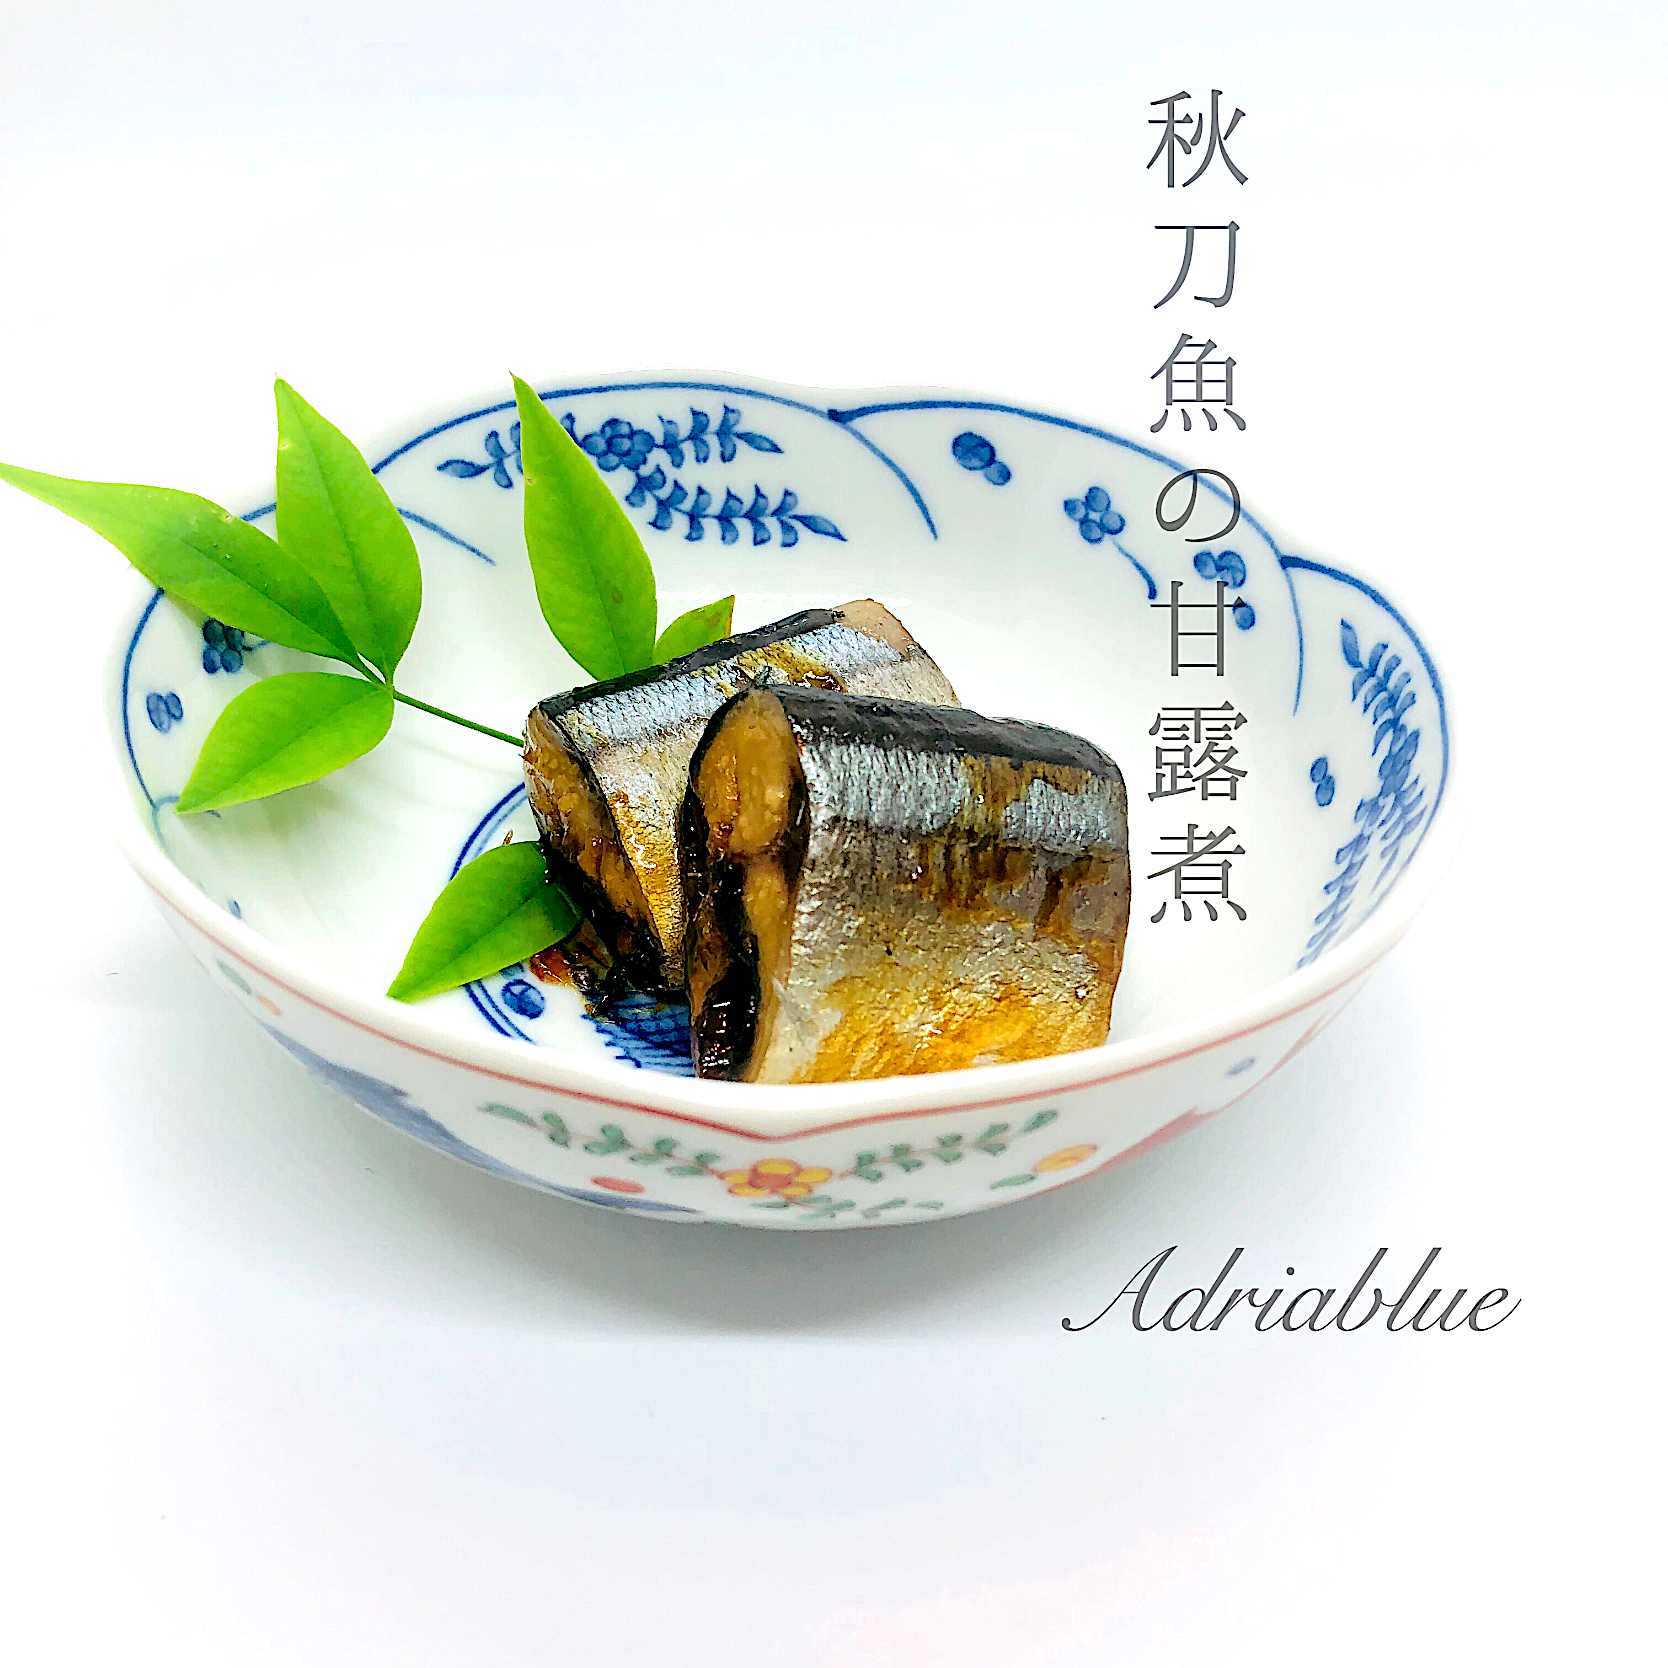 adriablueさんの料理 秋刀魚の甘露煮